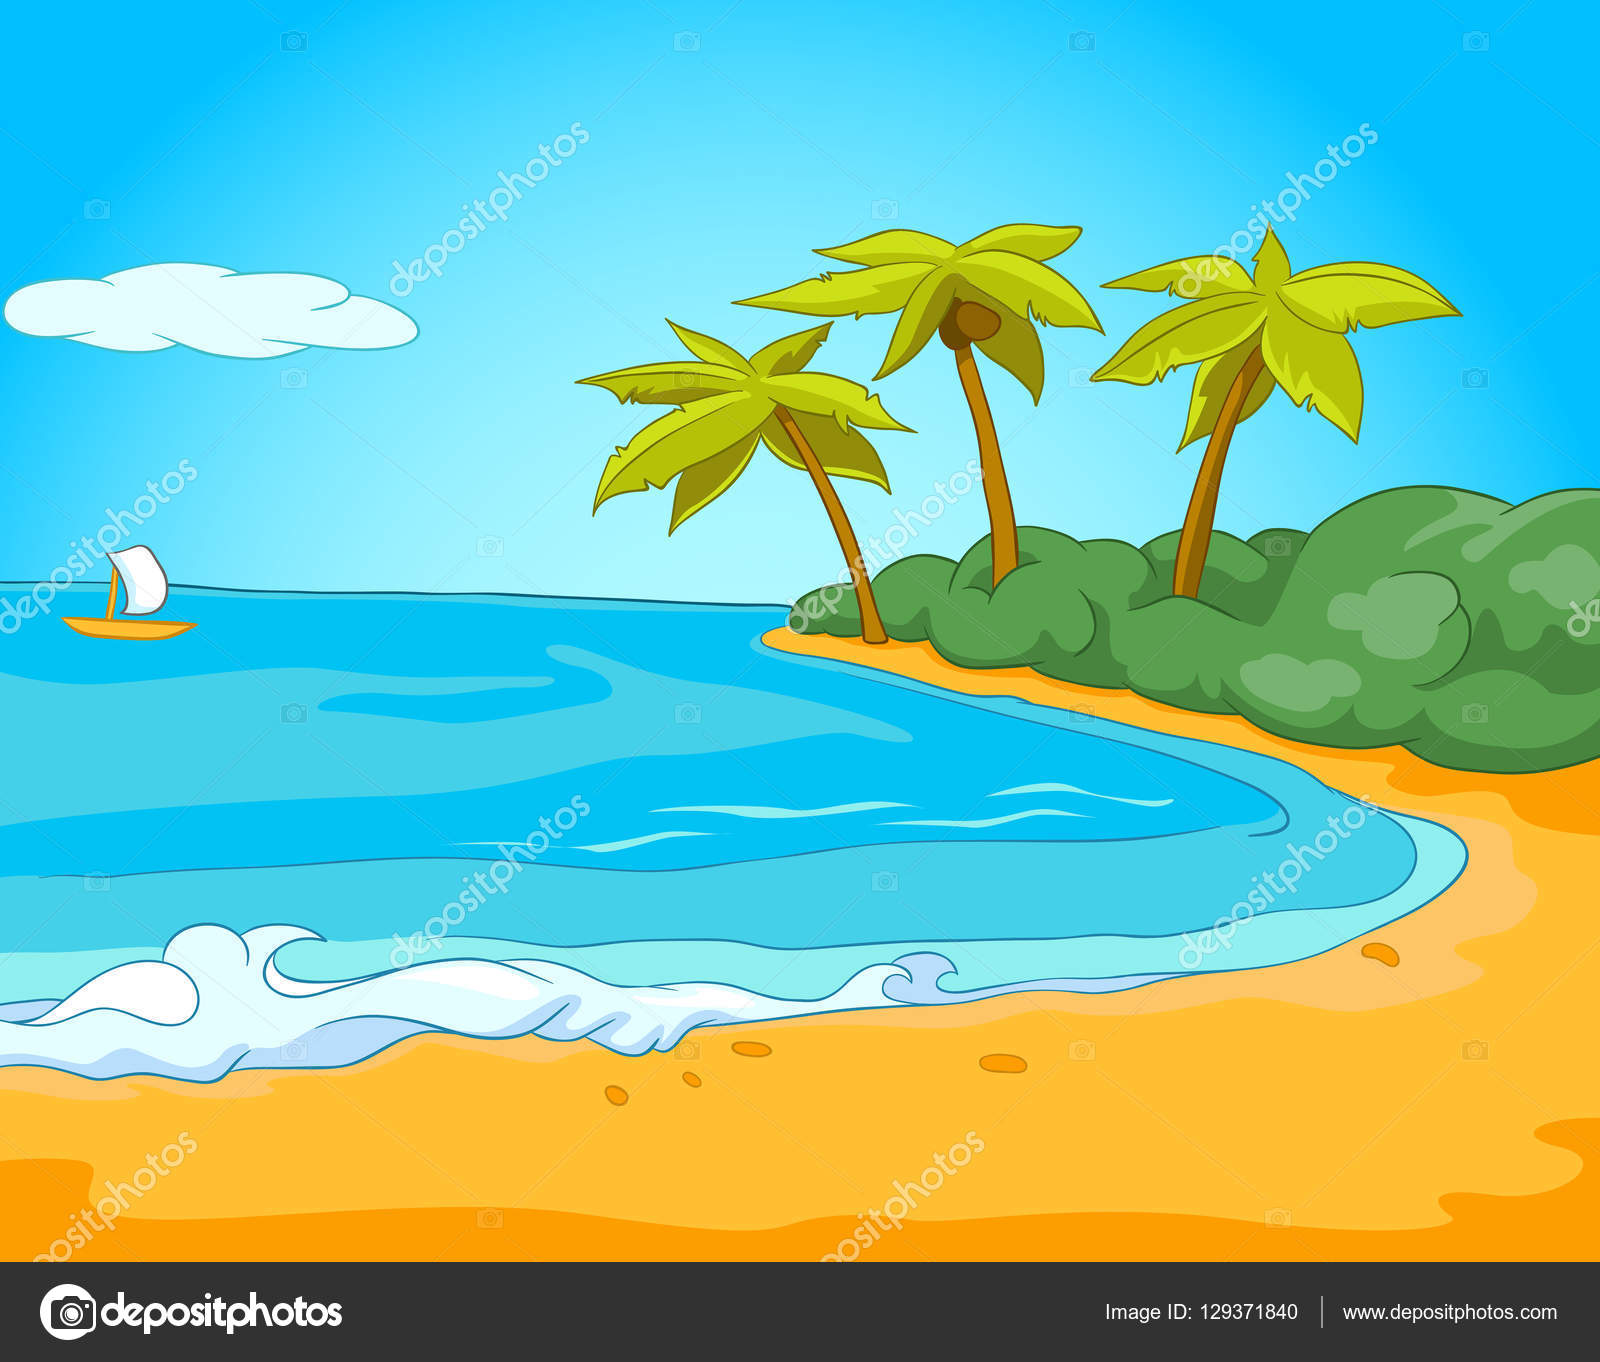 Cartoon background of tropical beach and sea. Stock Photo by  ©VisualGeneration 129371840